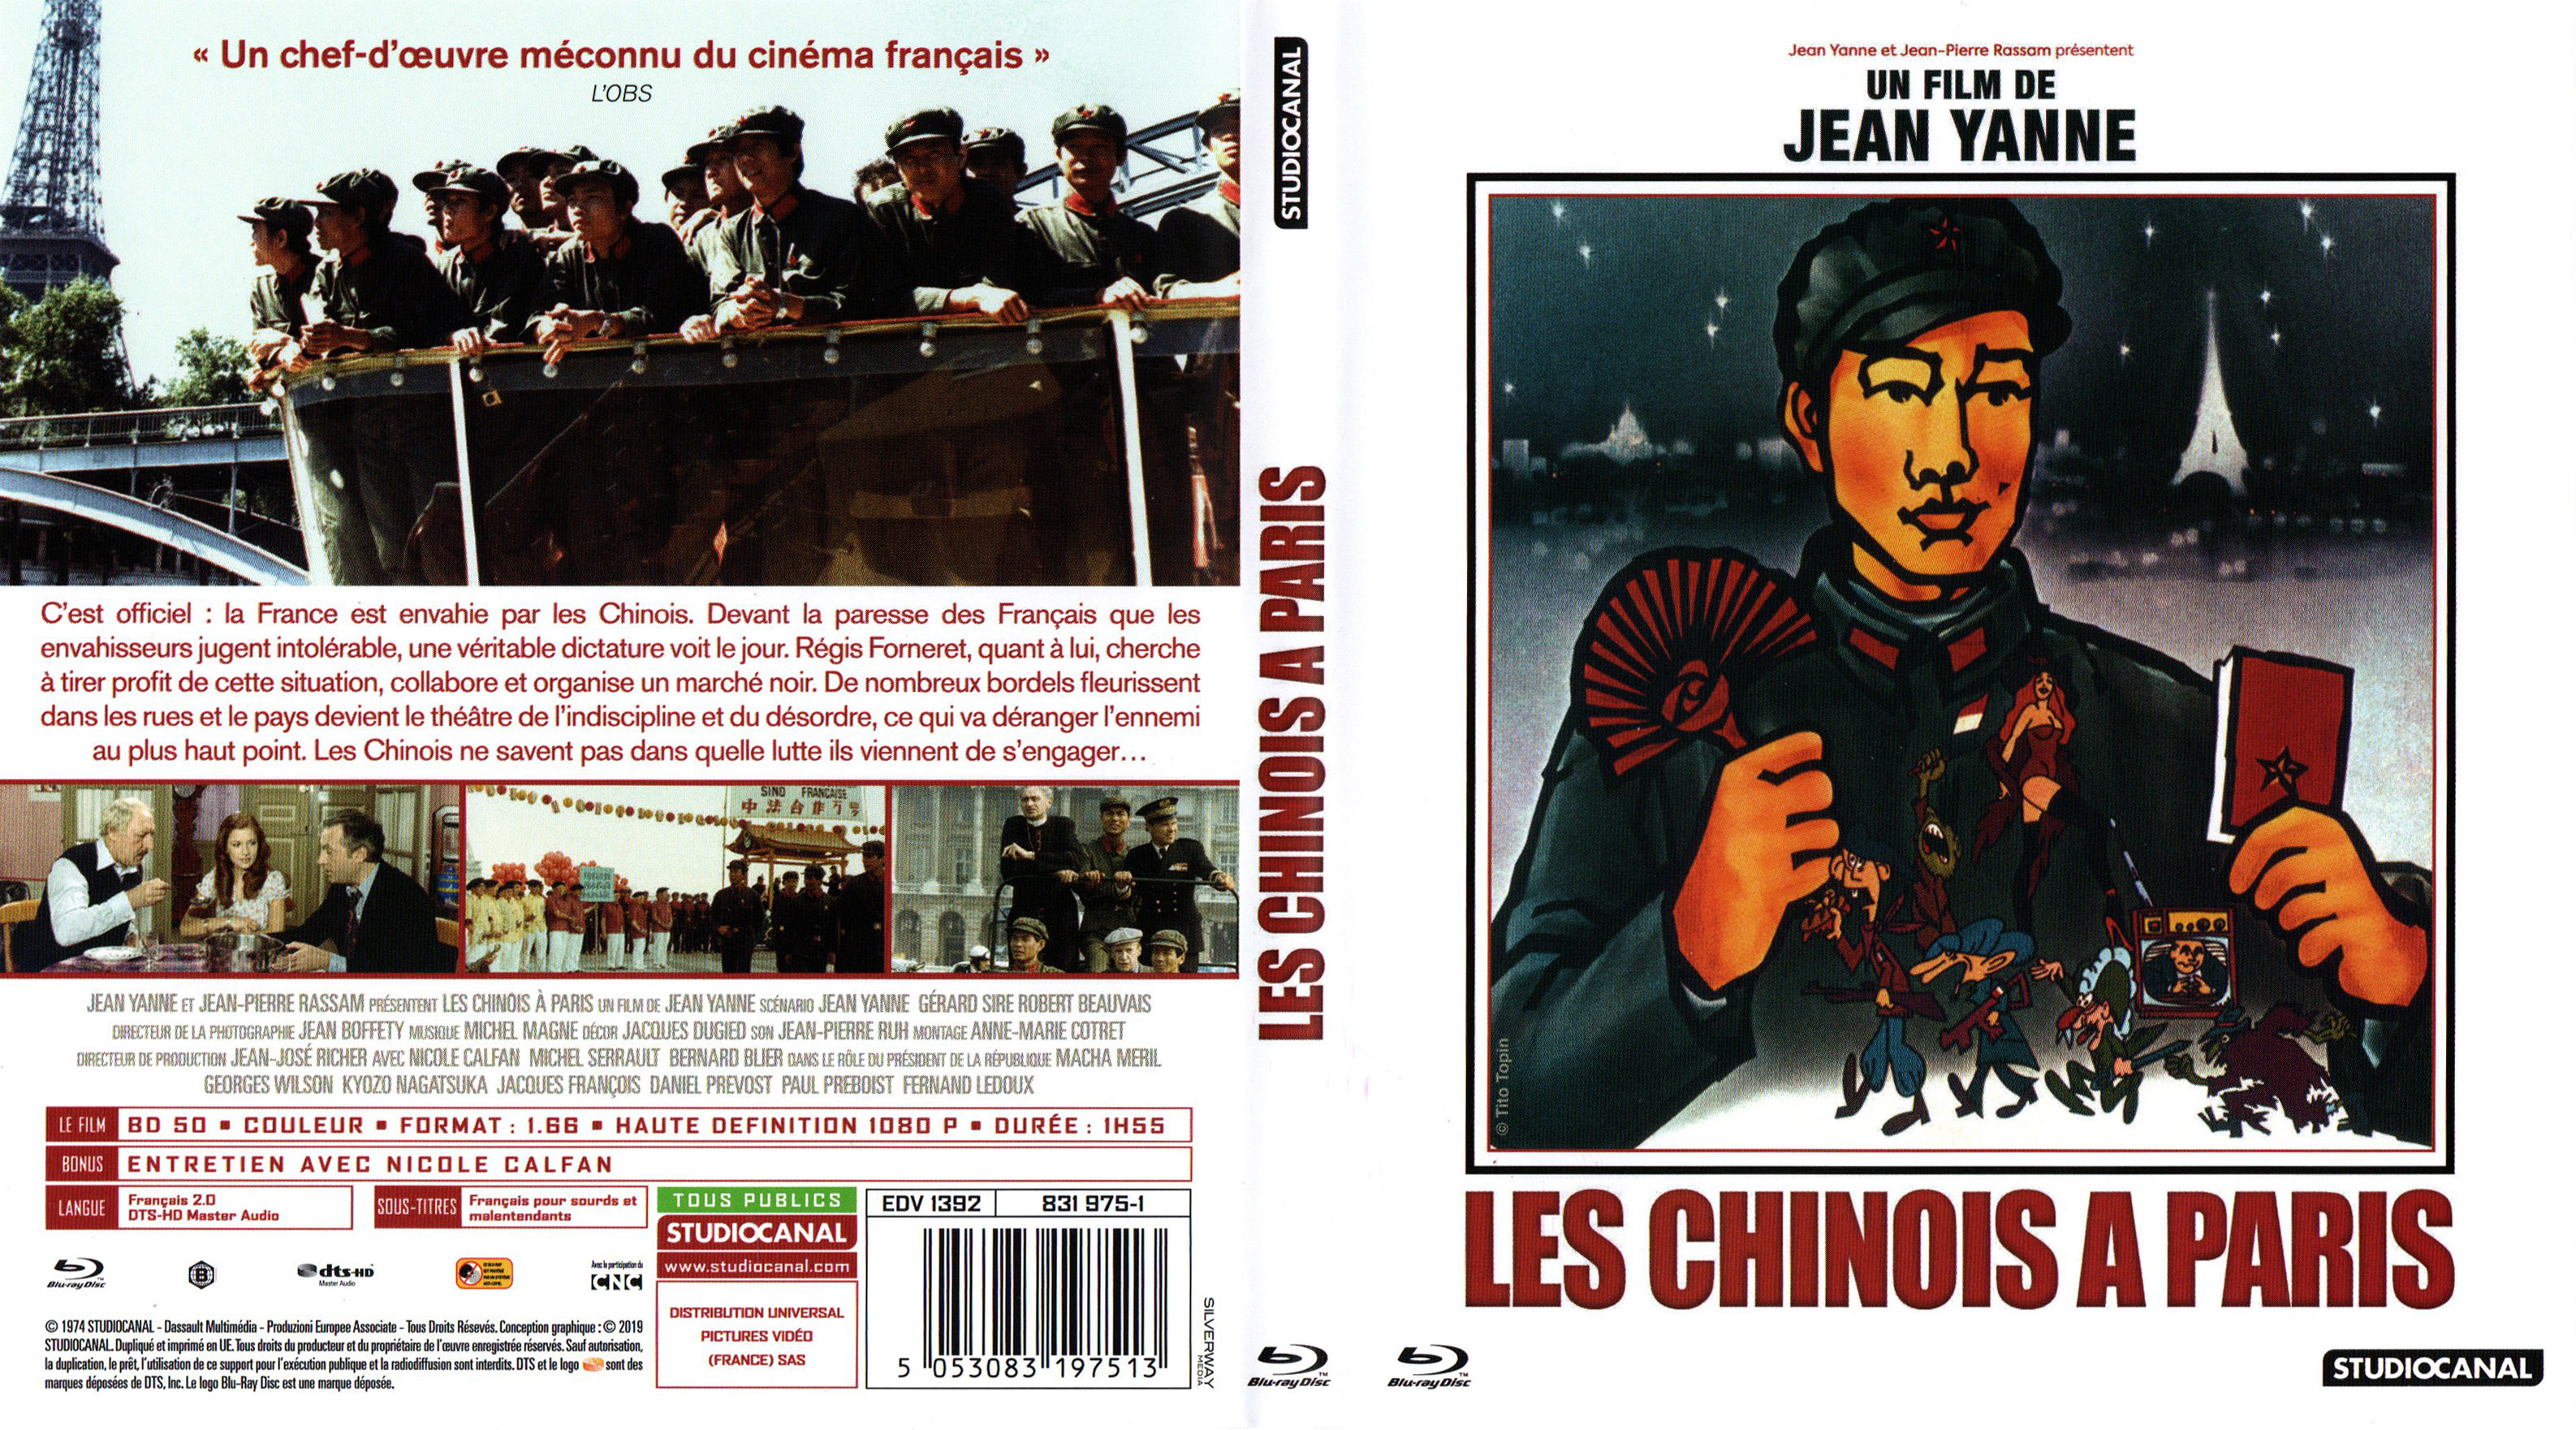 Jaquette DVD Les chinois  Paris (BLU-RAY)